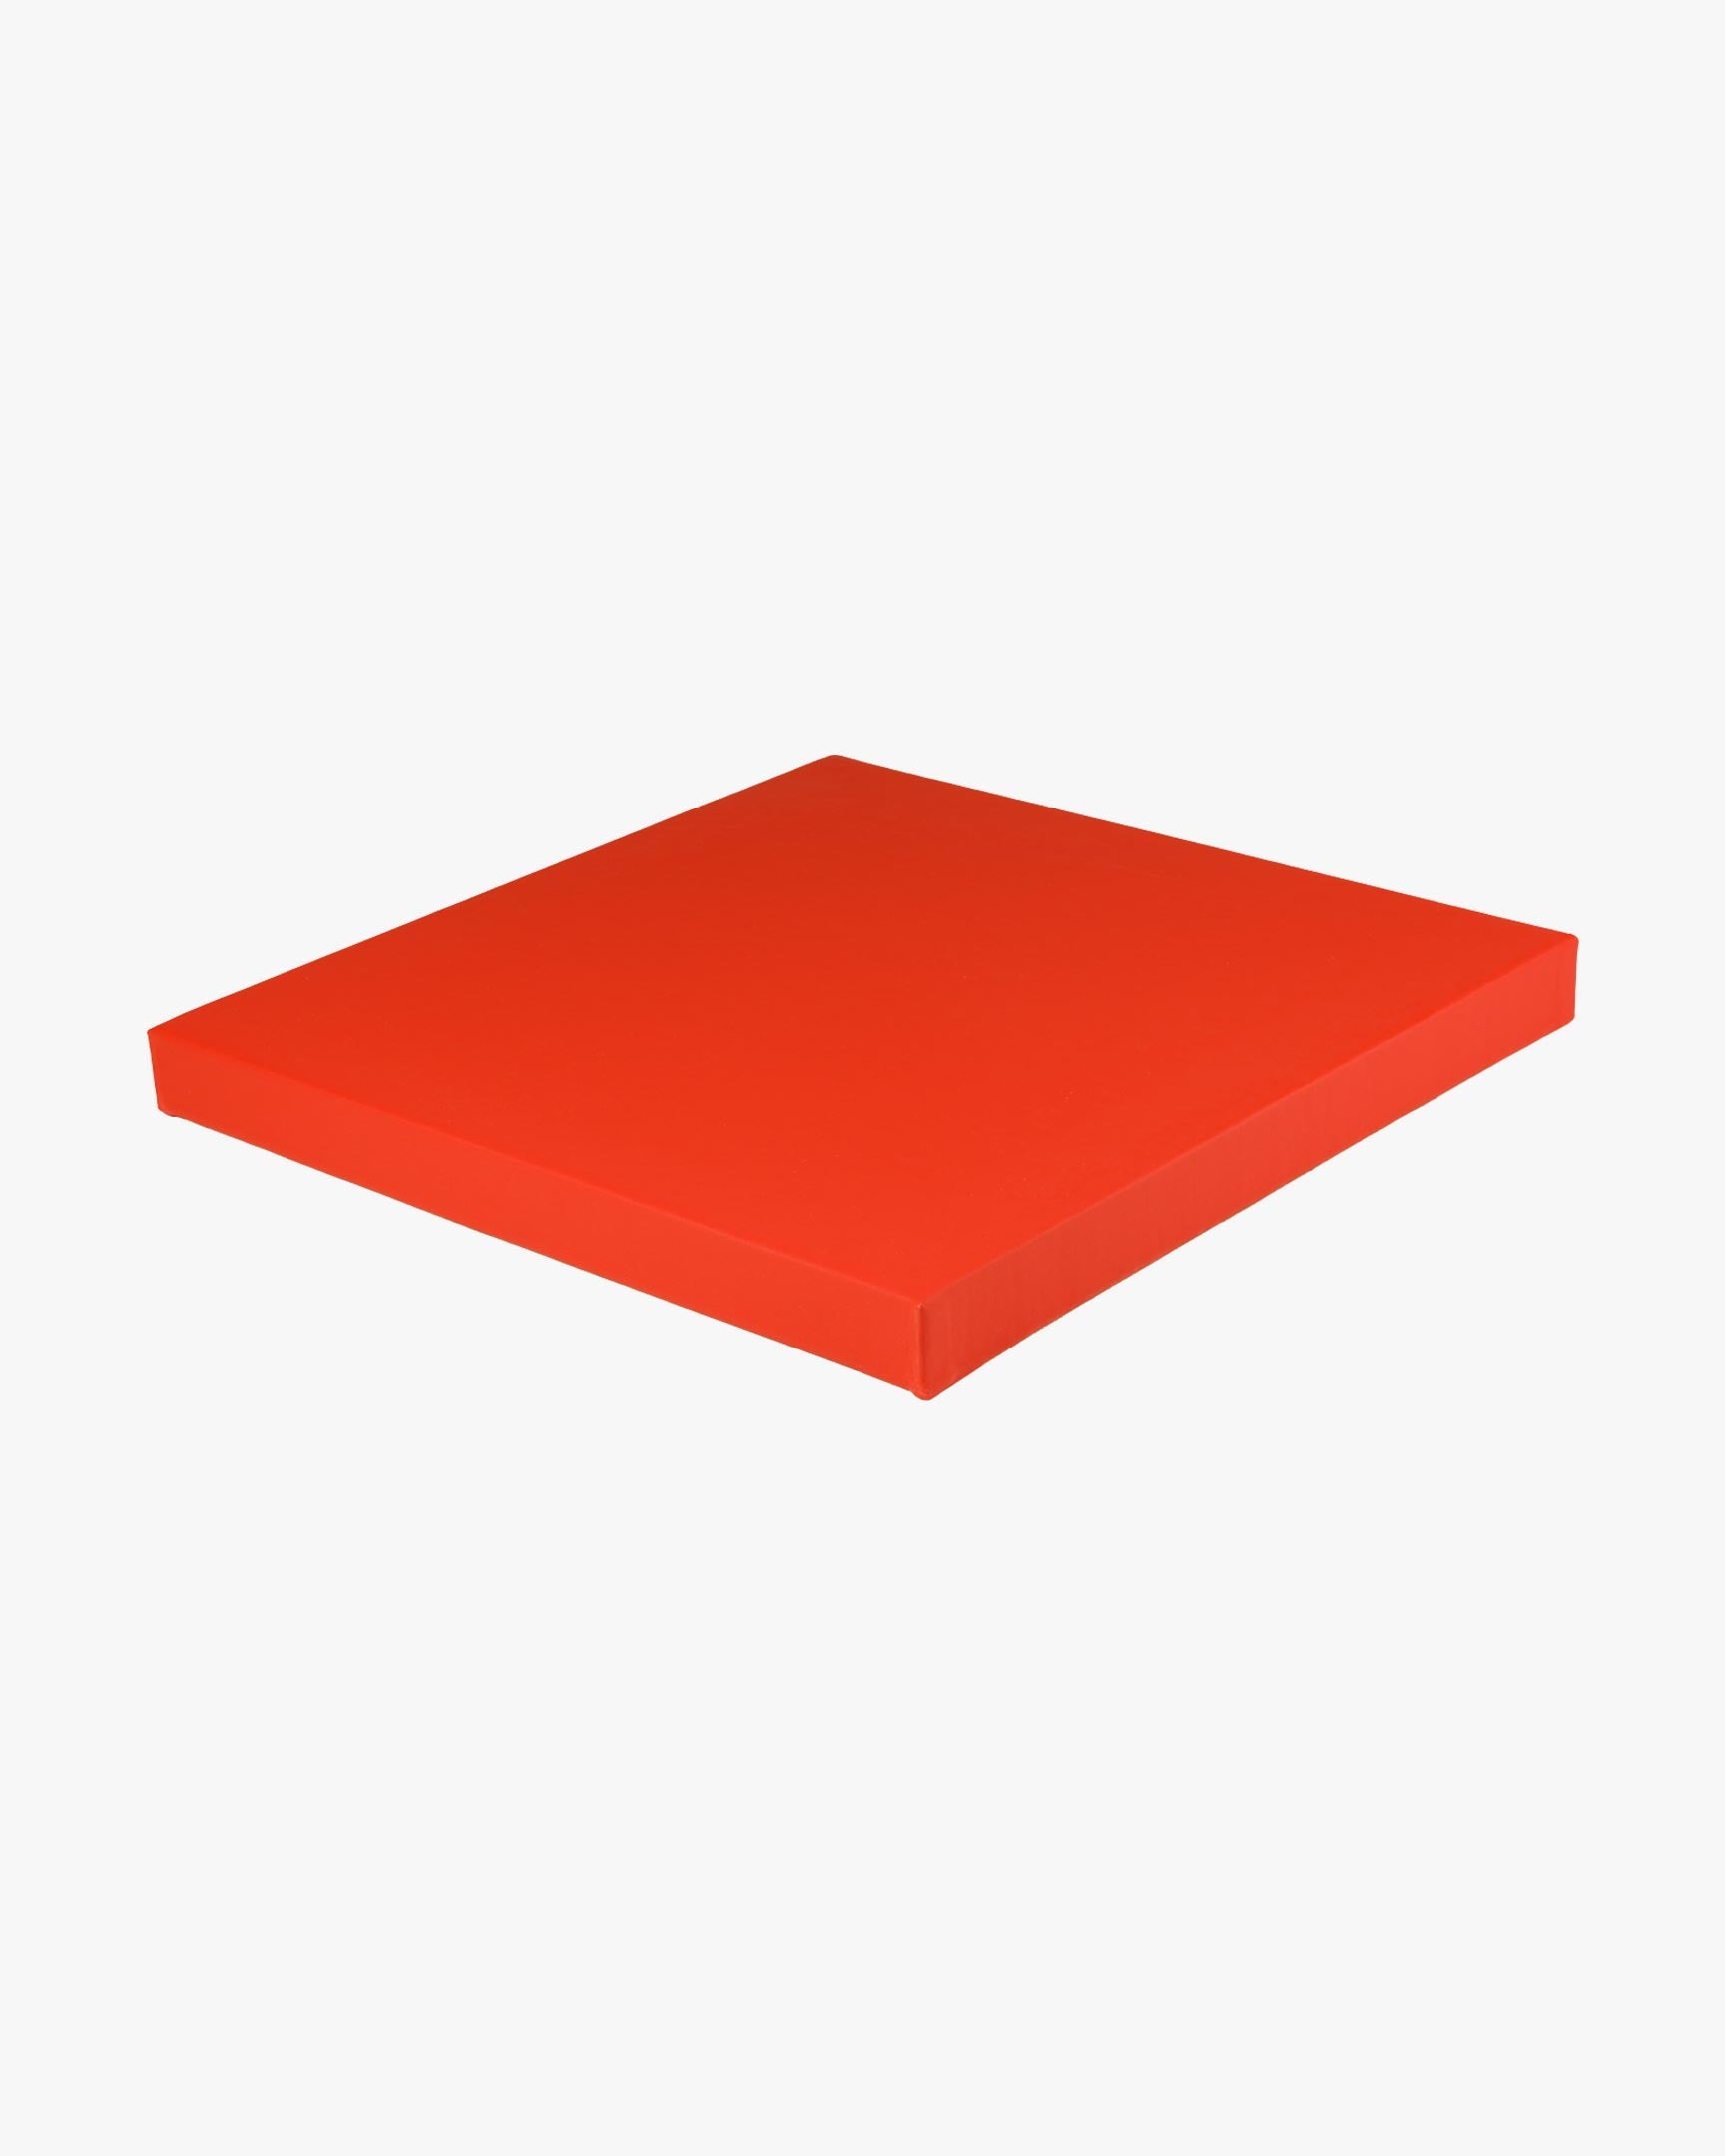 Smooth Tile Mat - 1m x 1m .75" Red